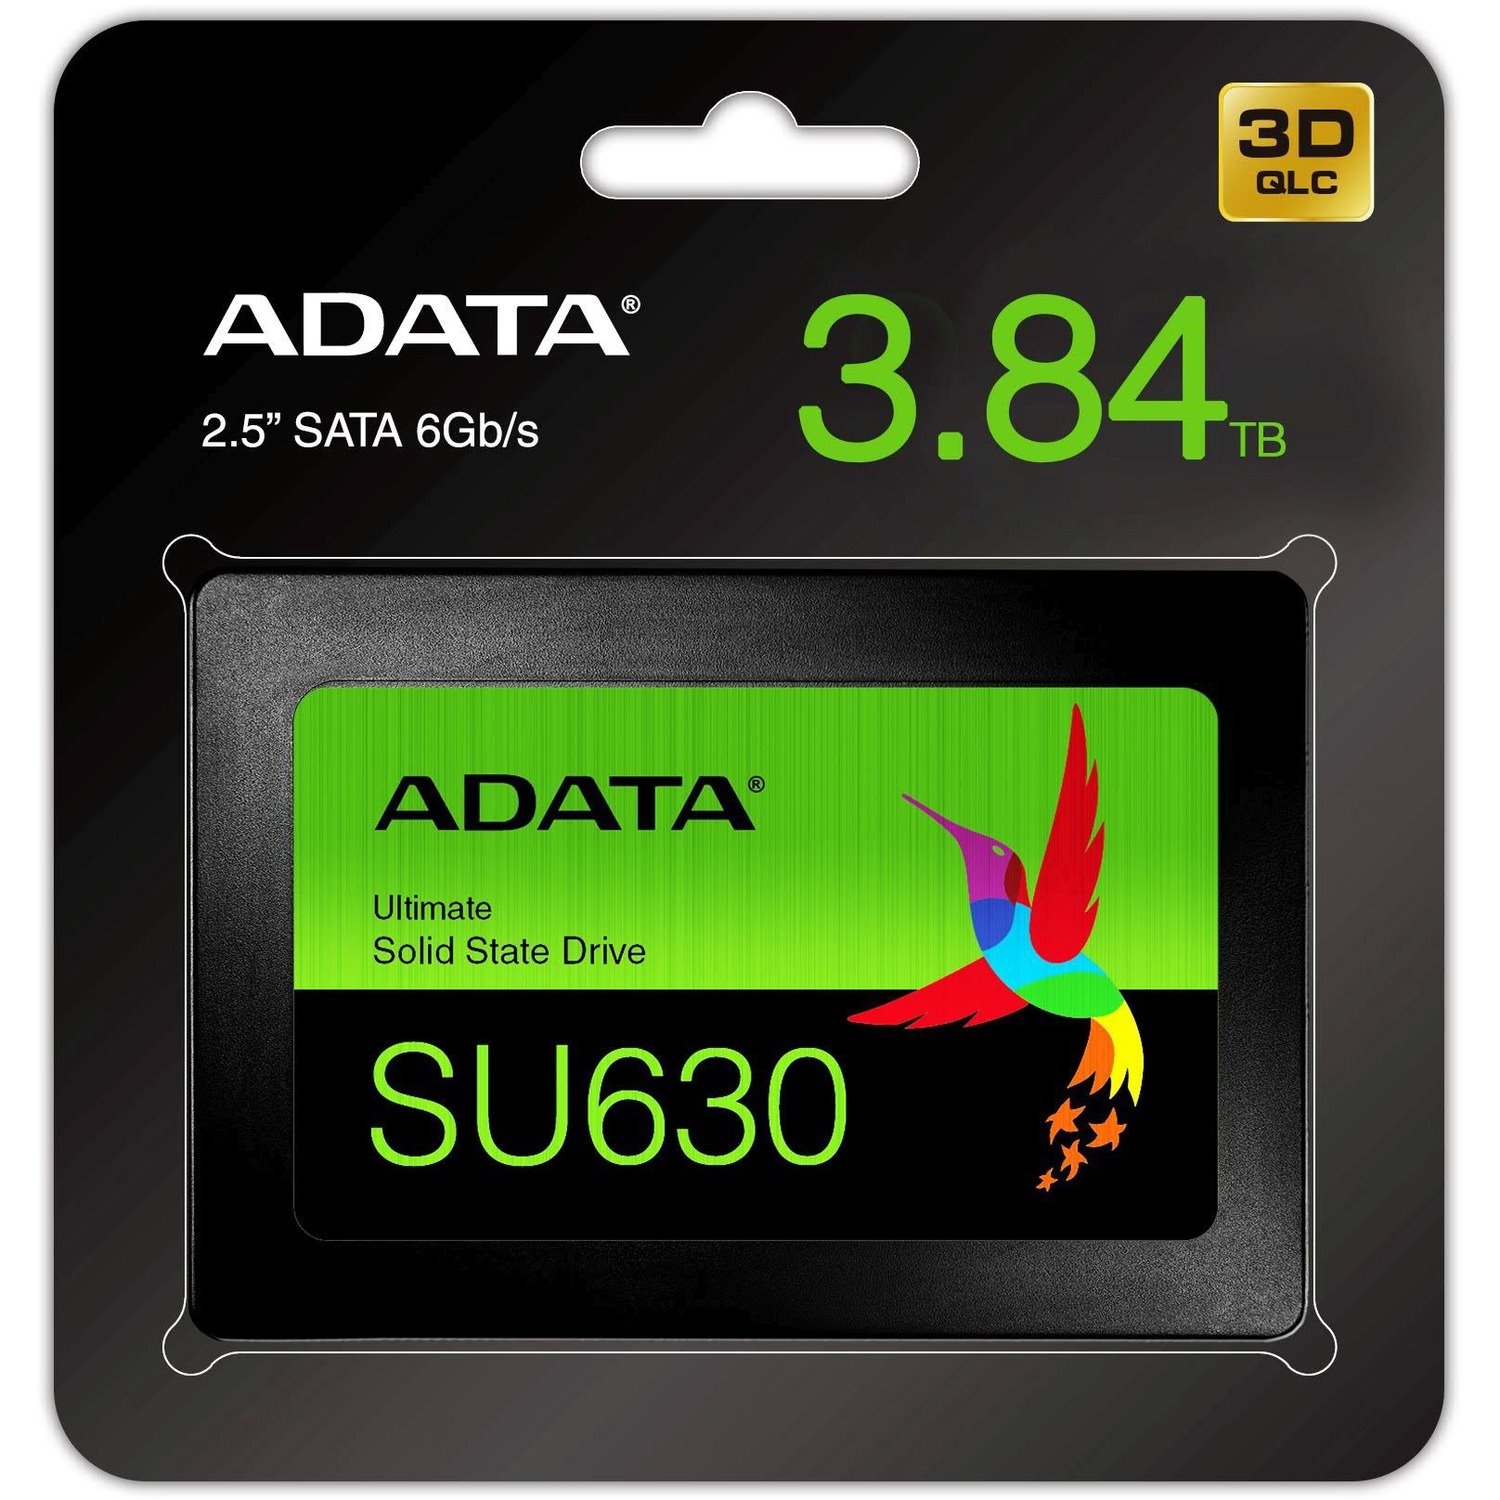 Adata Ultimate SU630 ASU630SS-3T84Q-R 3.84 TB Solid State Drive - 2.5" Internal - SATA (SATA/600)